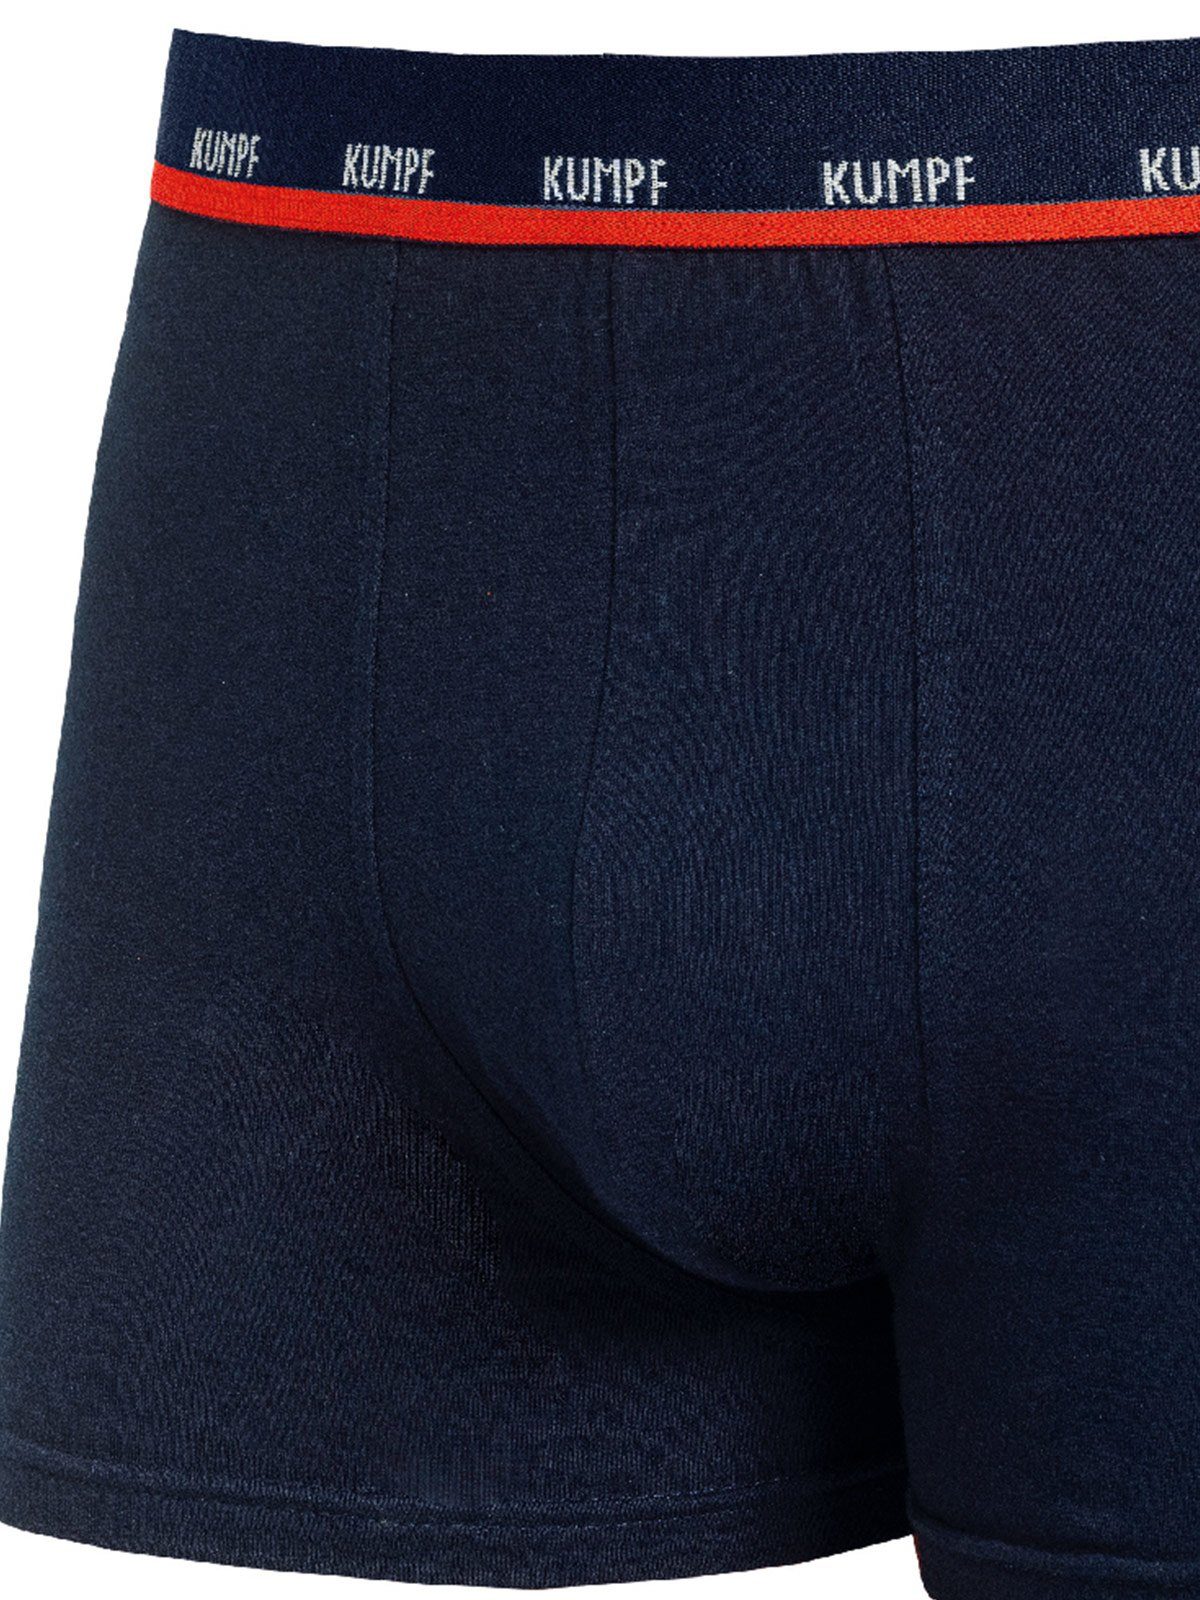 Gummibund navy 3-St) Pants 3er Cotton Pants Stretch Herren Materialmix Pack KUMPF (Packung, mit Retro